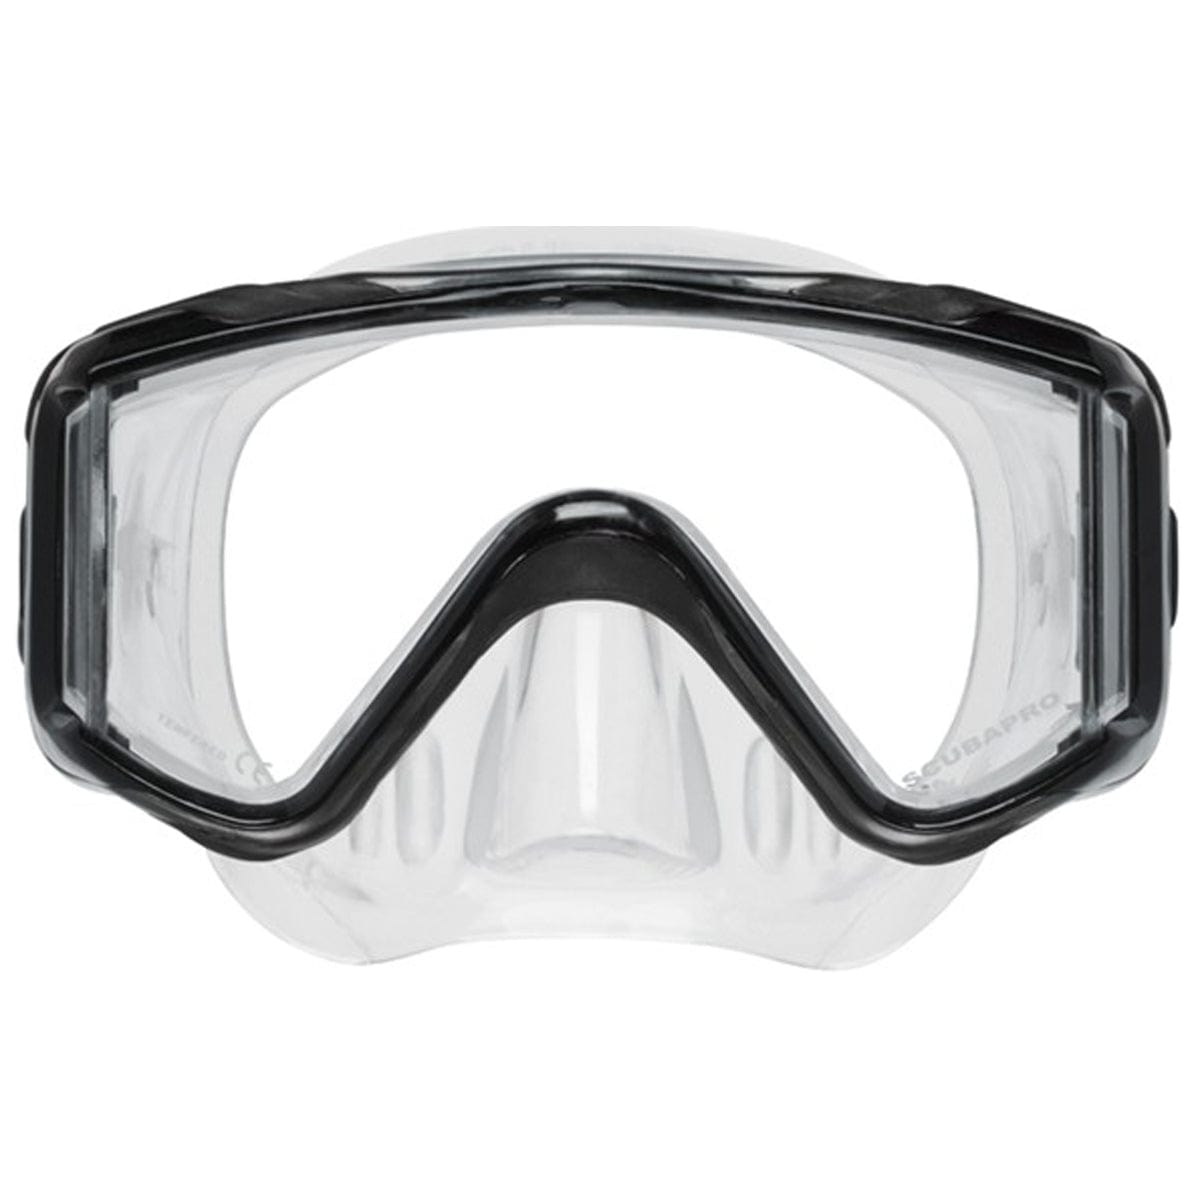 Scubapro Crystal VU Plus w/o Purge Mask - Black/Gray-Clear Skirt - 8